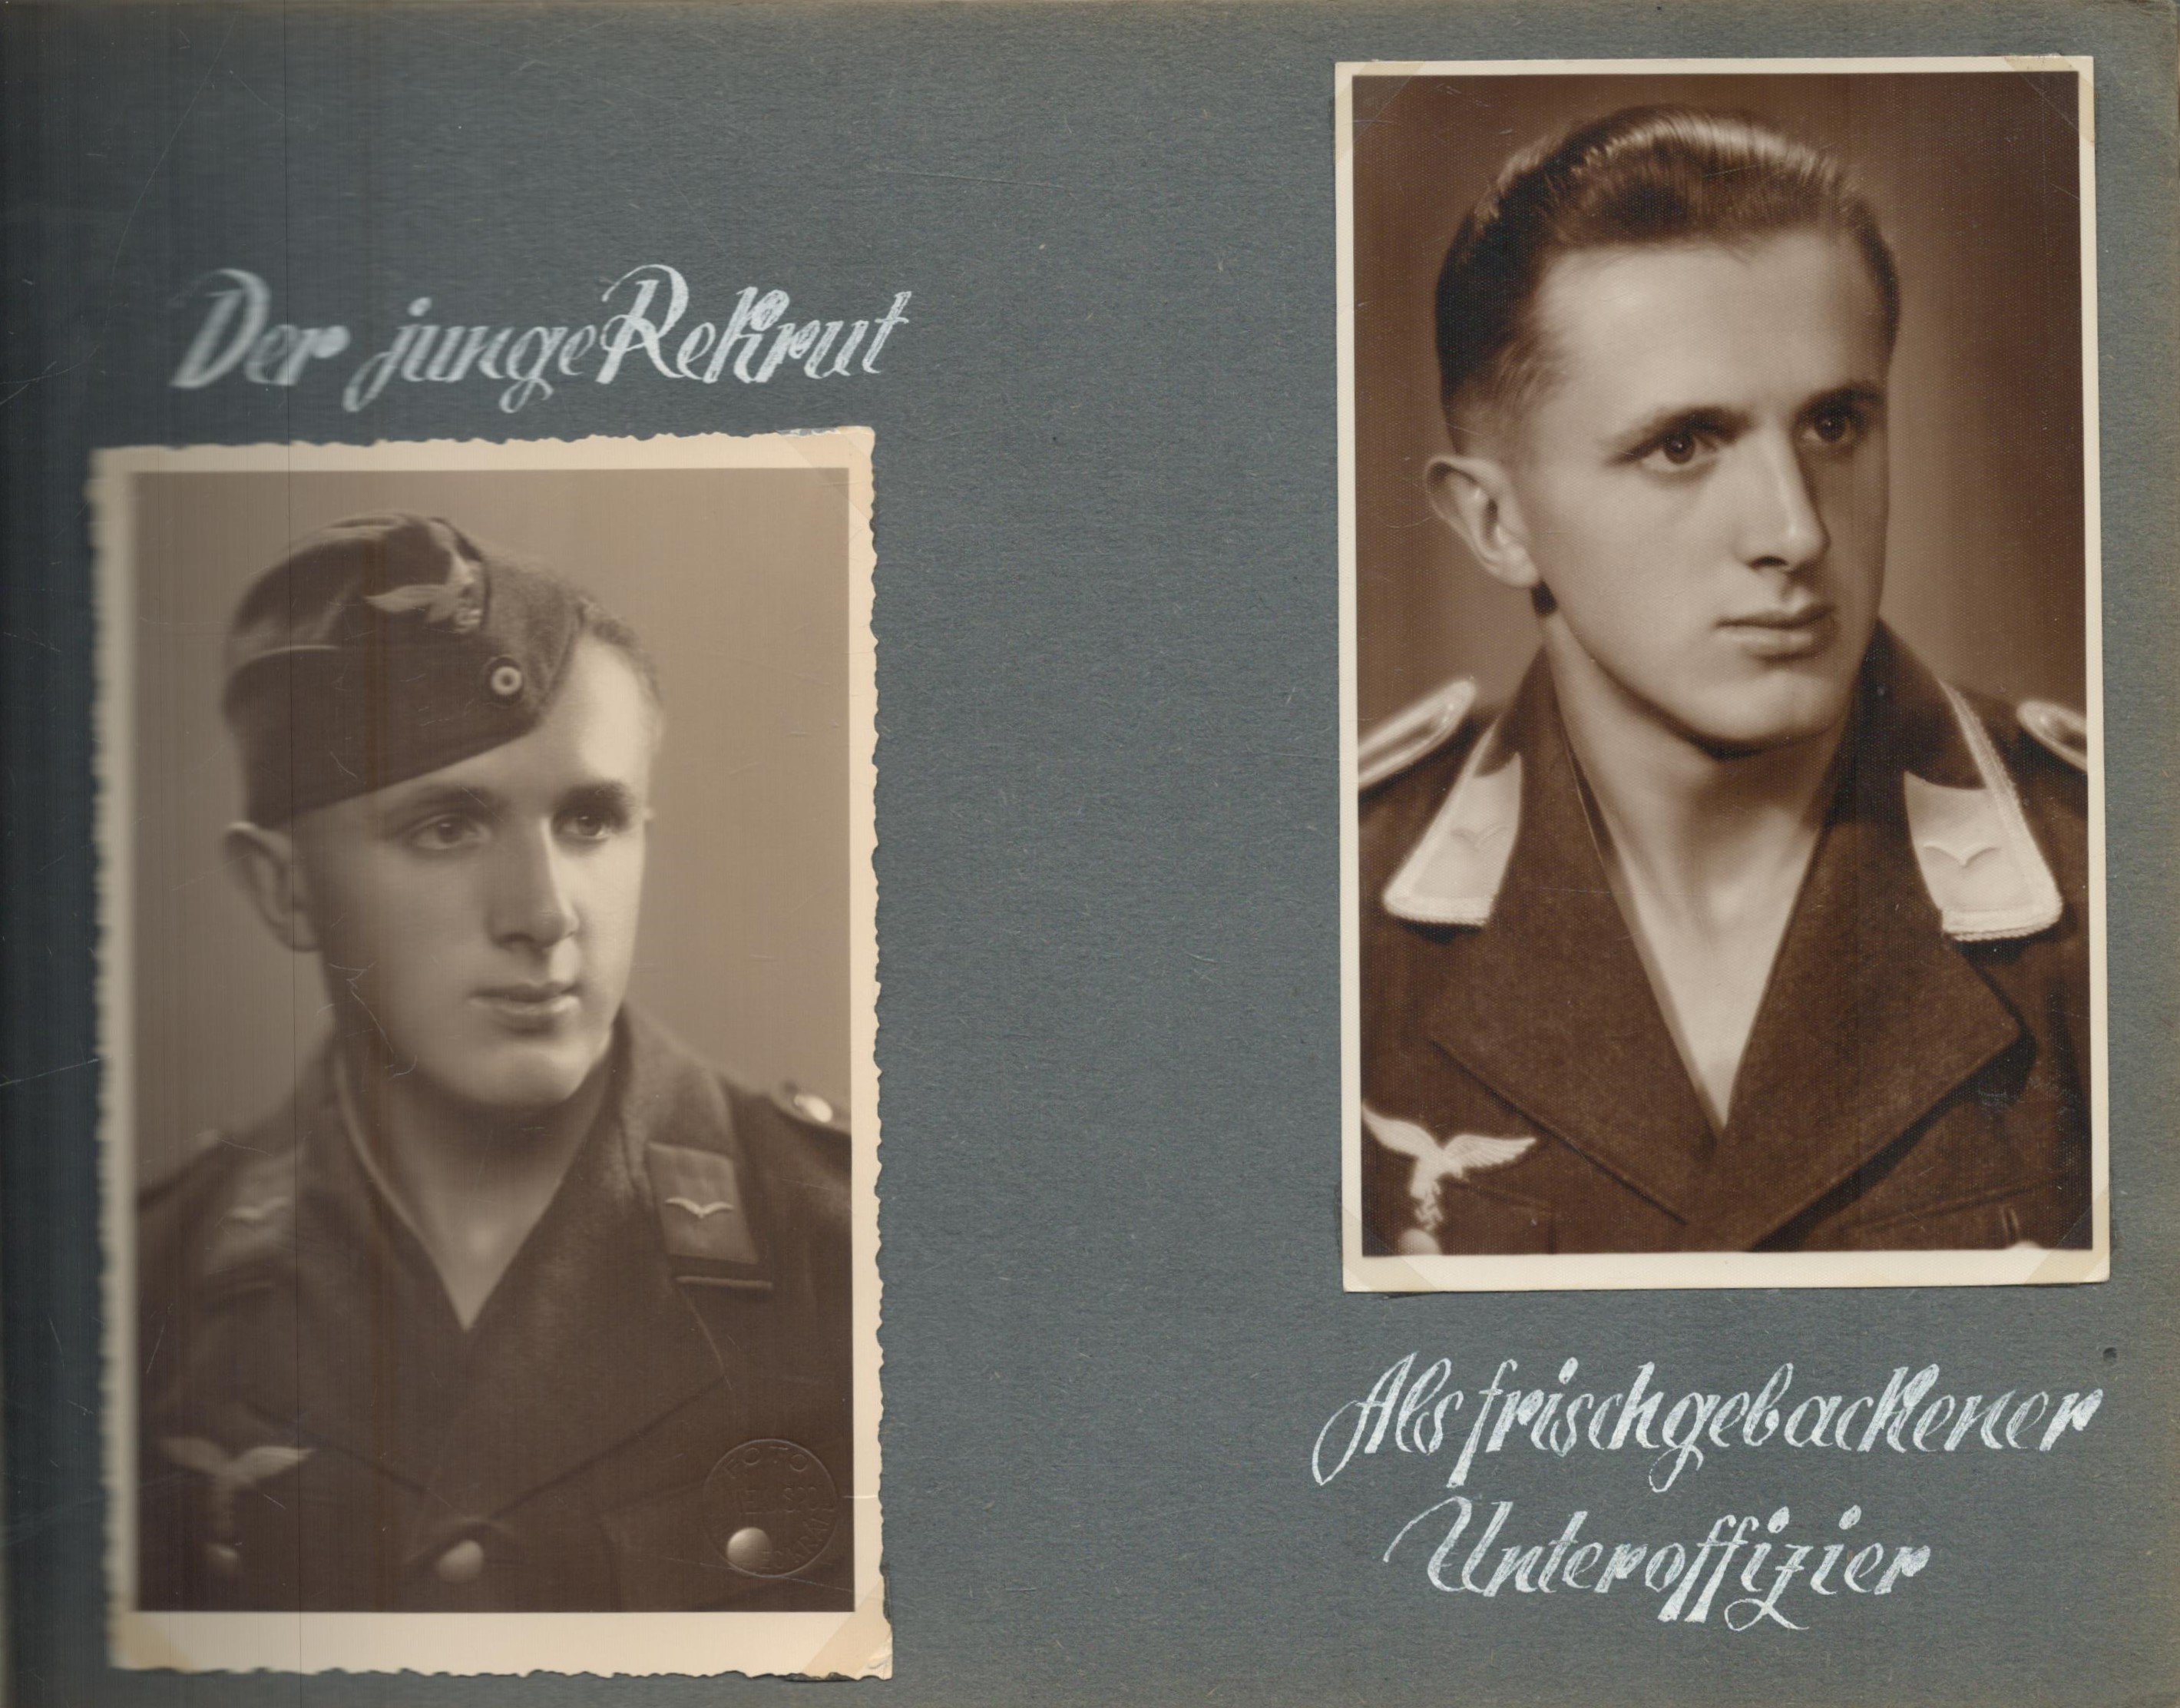 Luftwaffe Stuka Operator photo album of the career and war memories of Erich Heine rear gunner and - Image 6 of 12